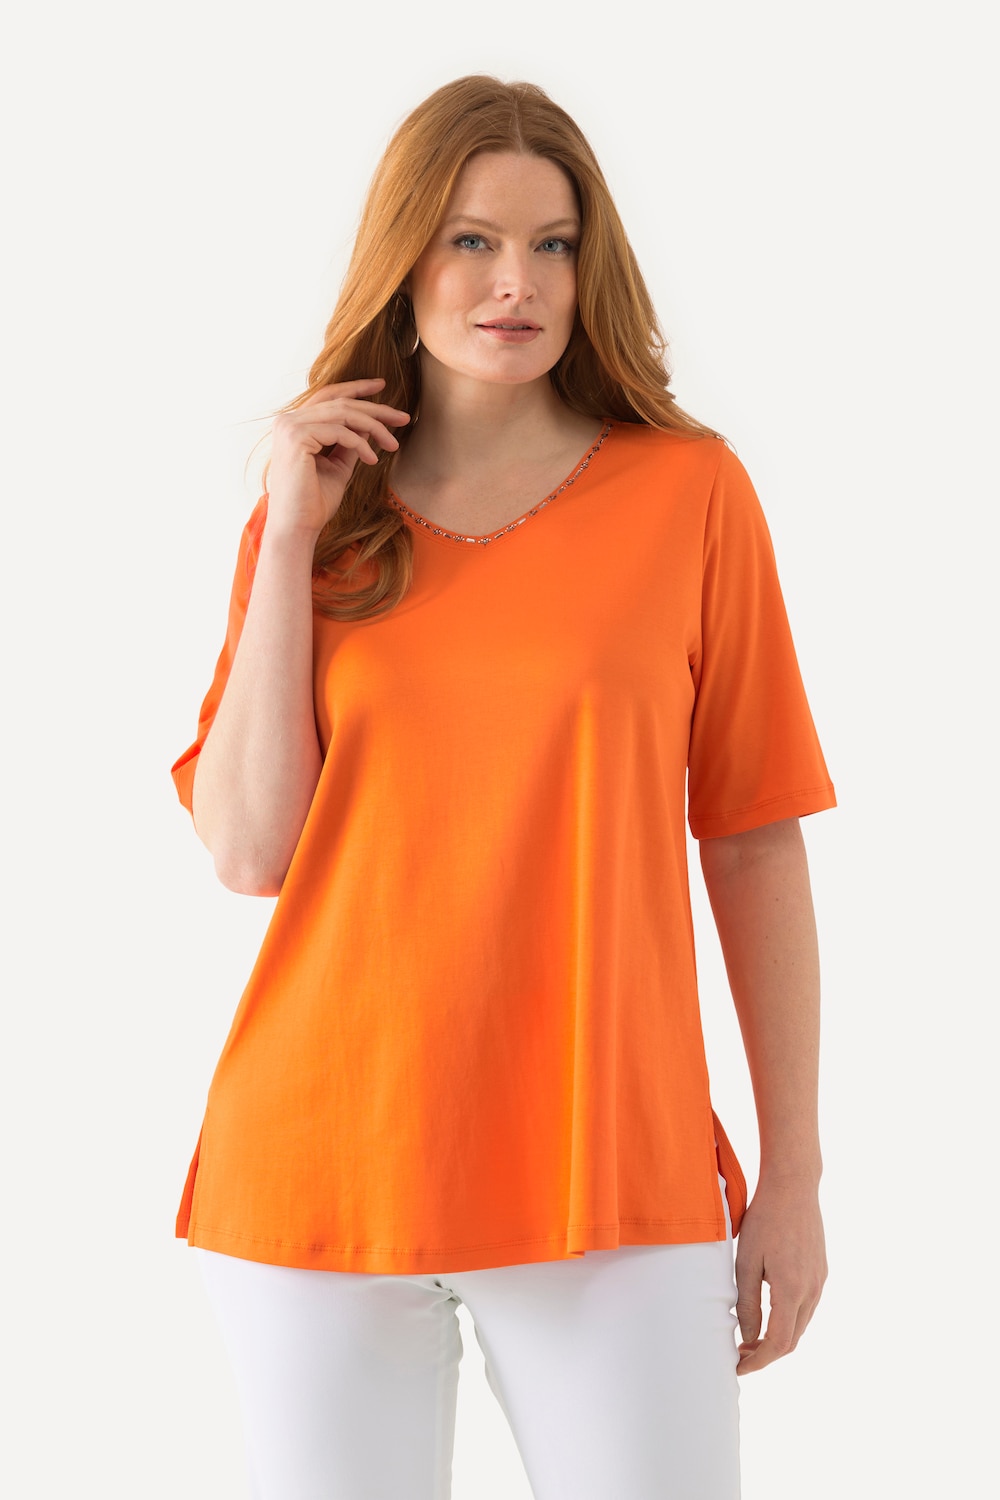 Grote Maten T-shirt, Dames, oranje, Maat: 42/44, Katoen, Ulla Popken